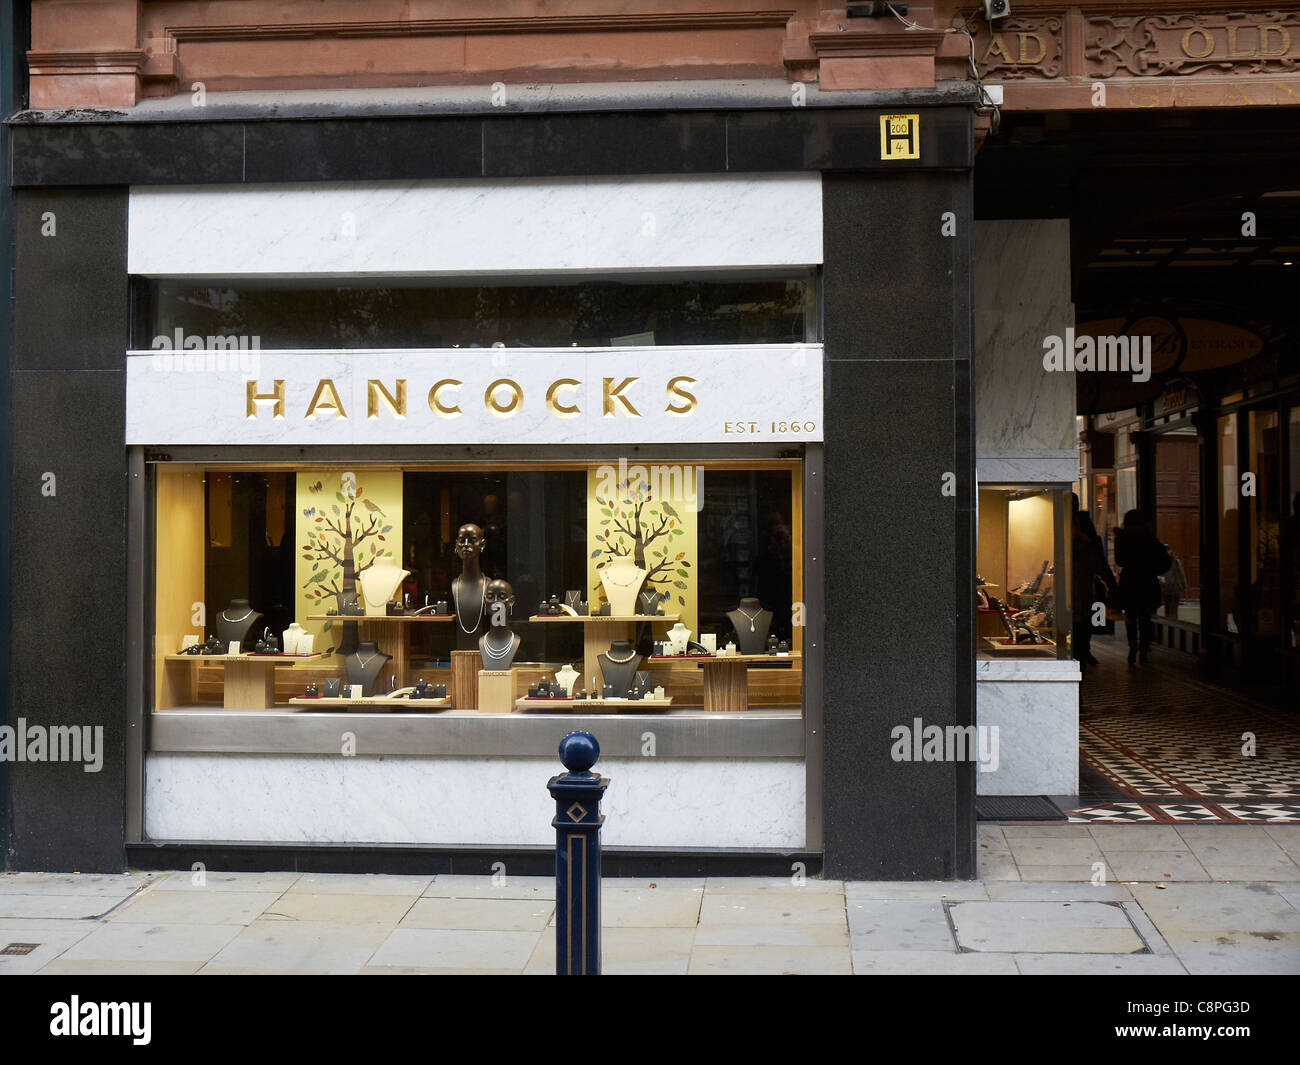 Hancocks jewellery shop in Manchester UK Stock Photo - Alamy